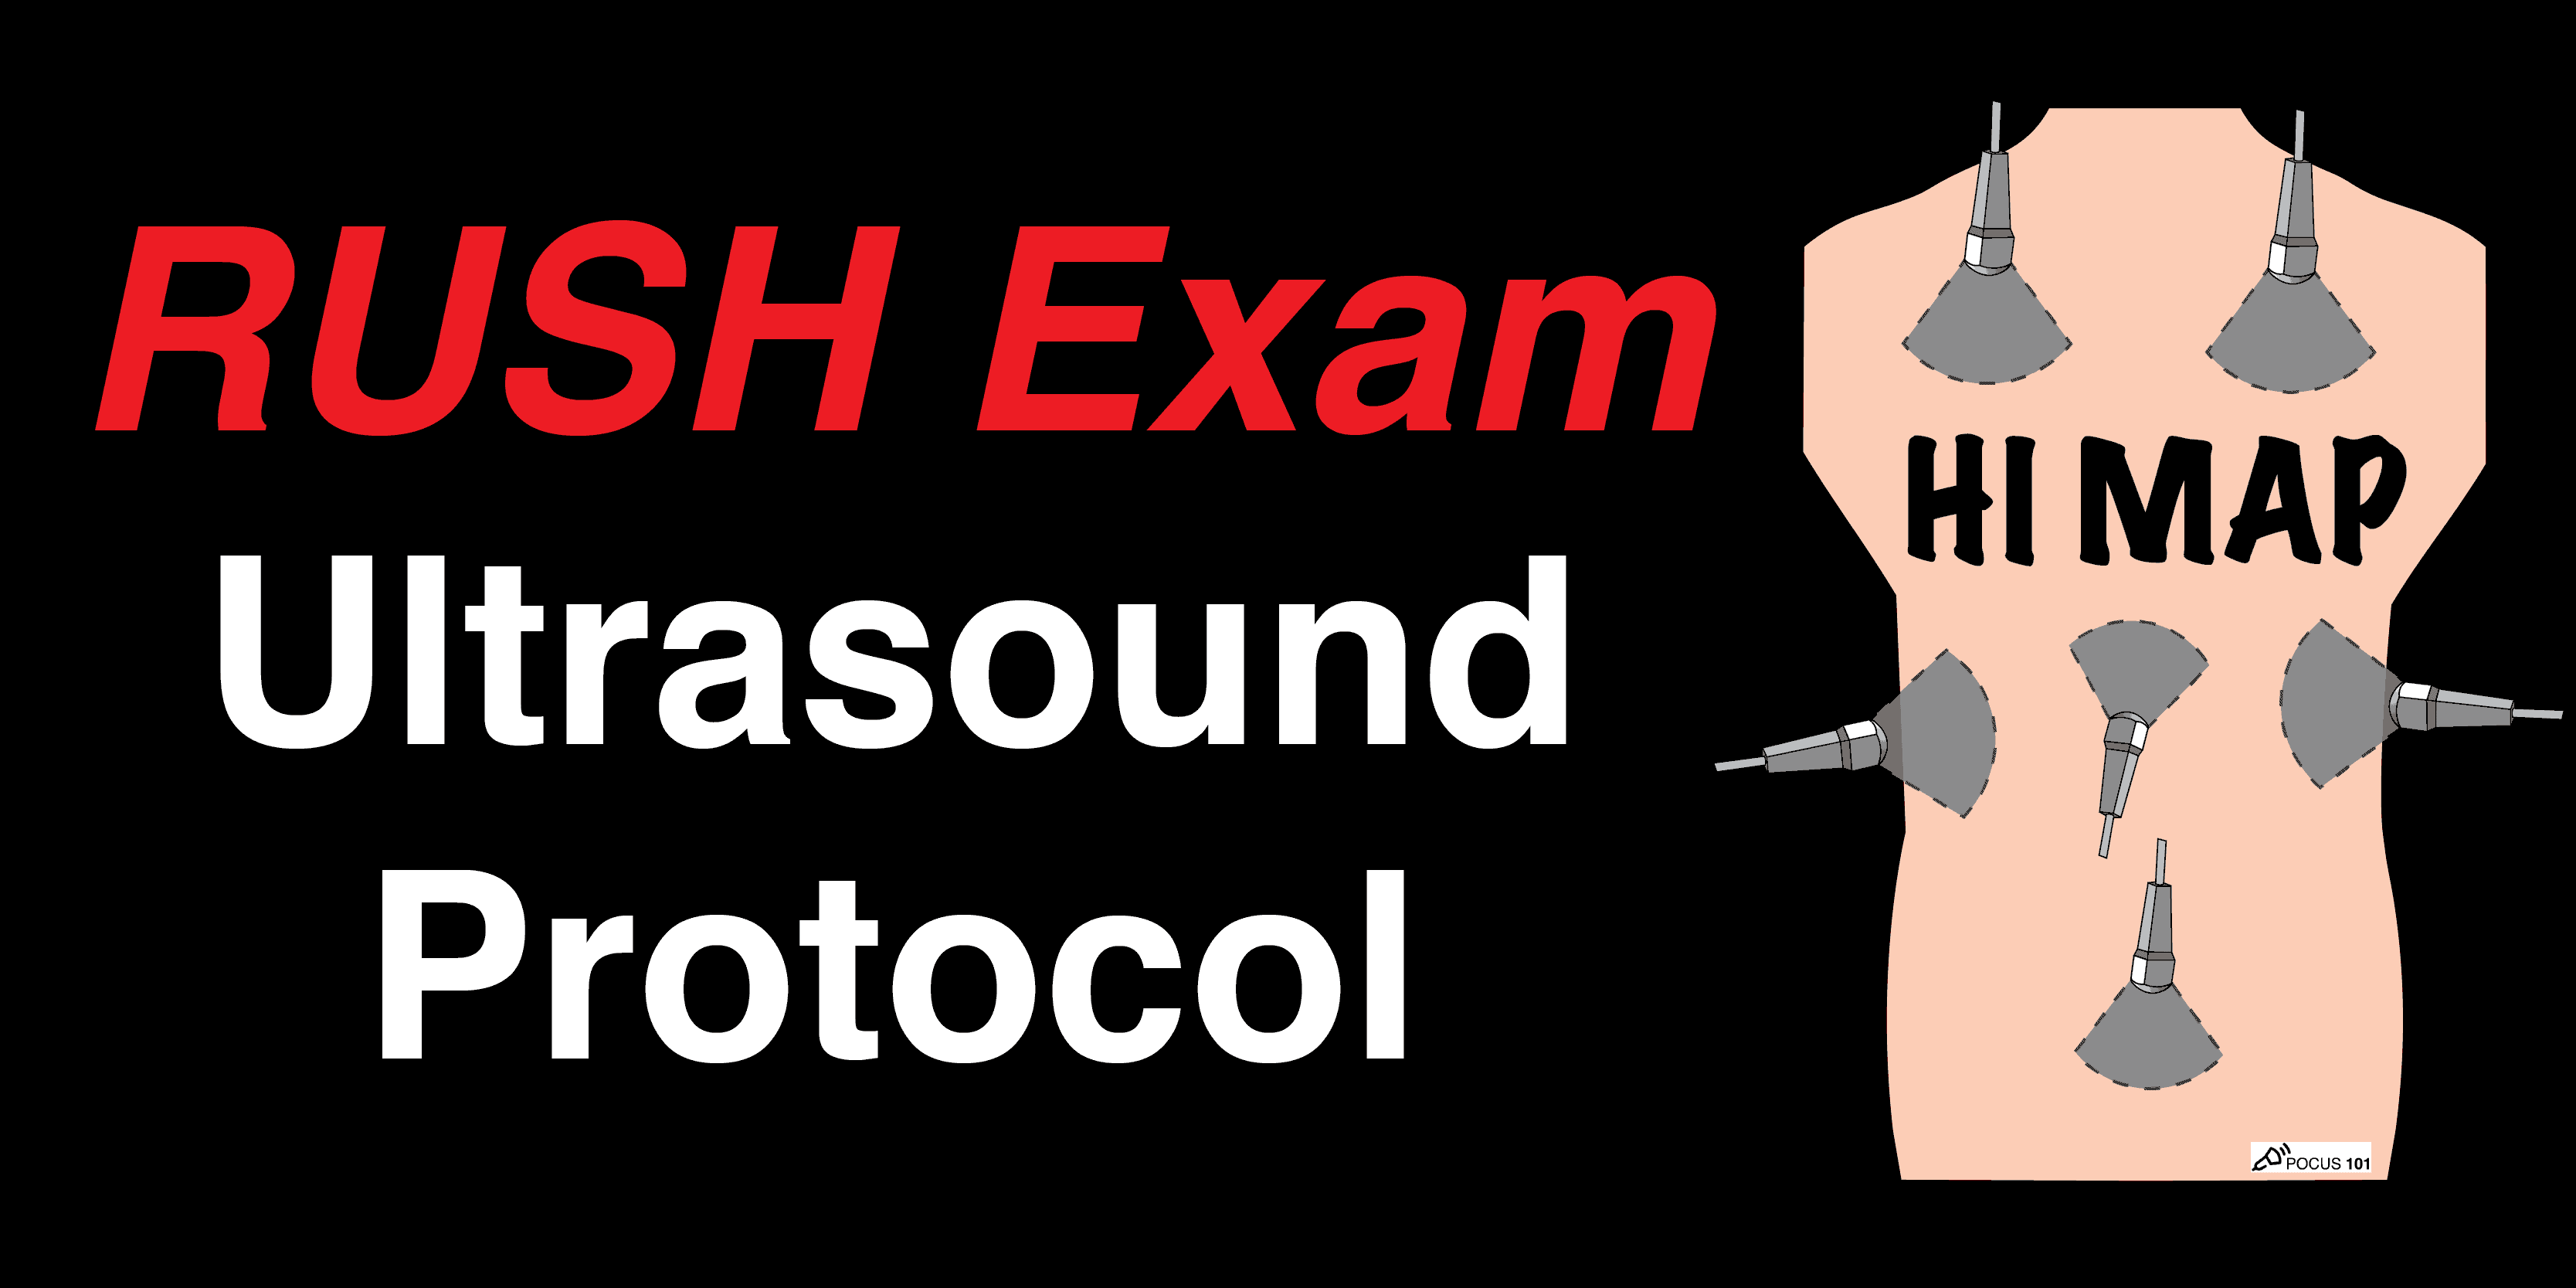 RUSH Exam Ultrasound Protocol